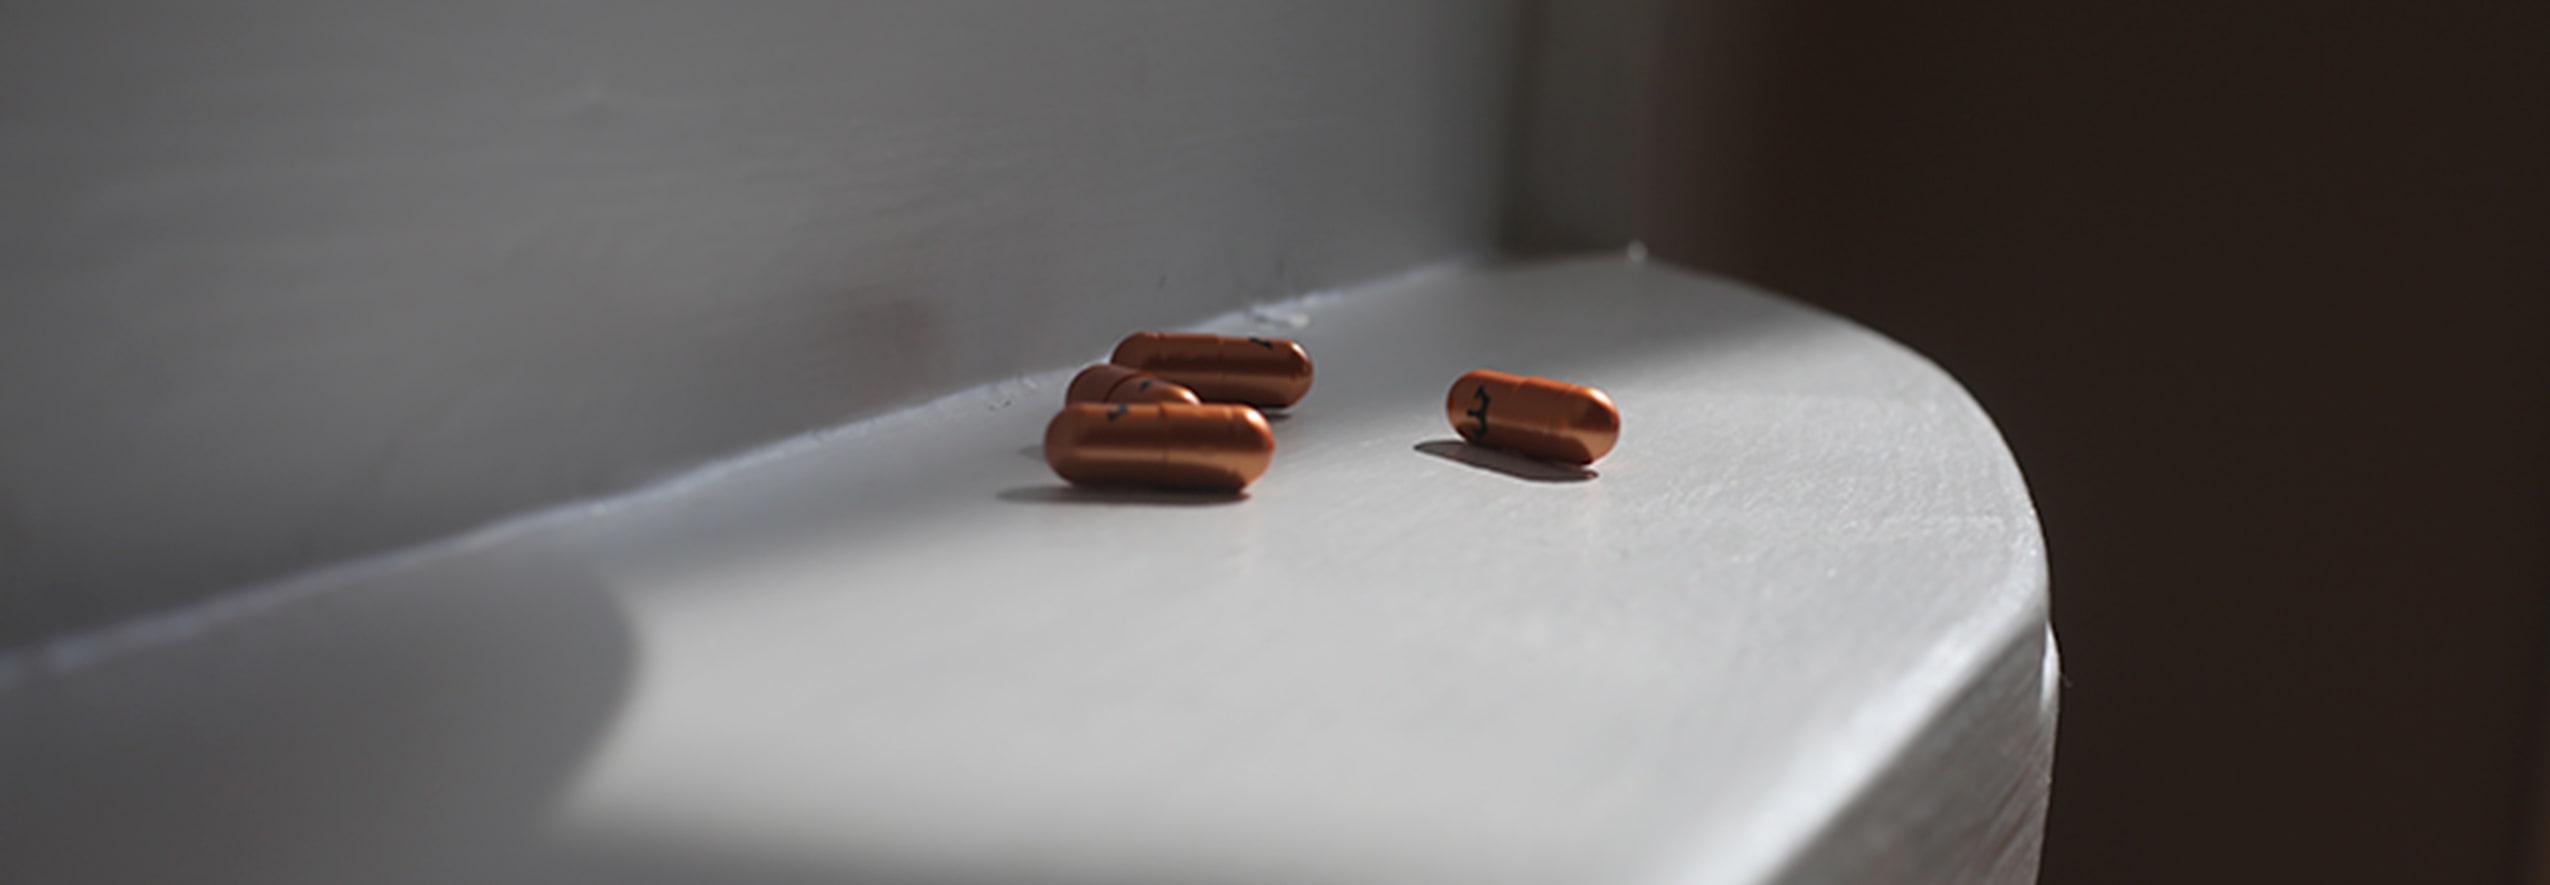 pills on ironing table